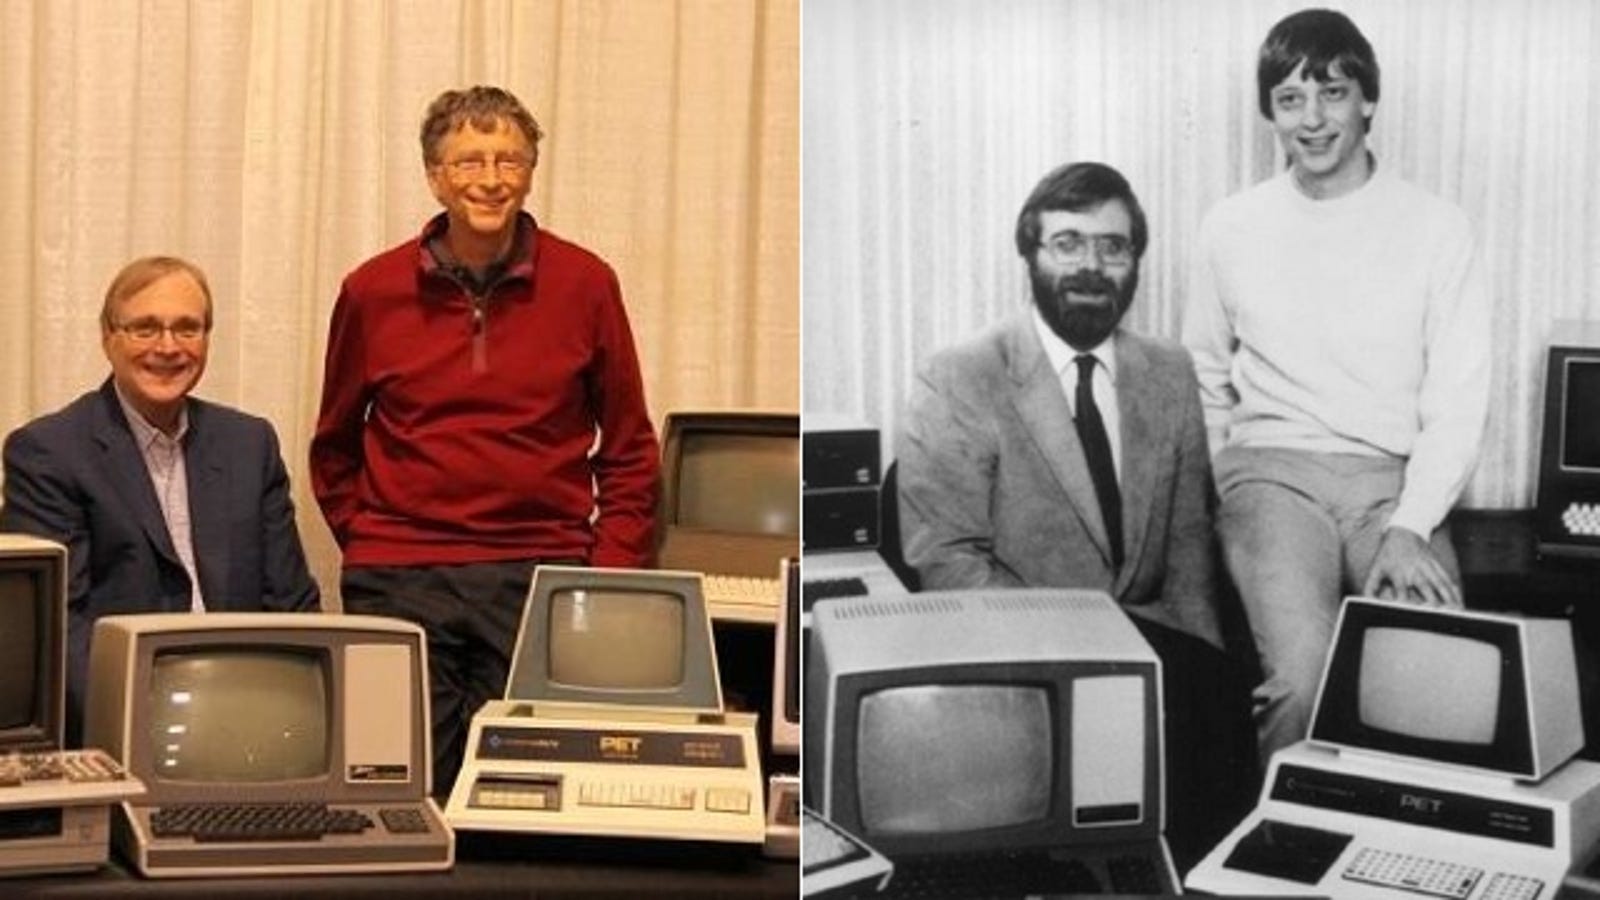 Bill Gates And Paul Allen Recreate Iconic Microsoft Photo